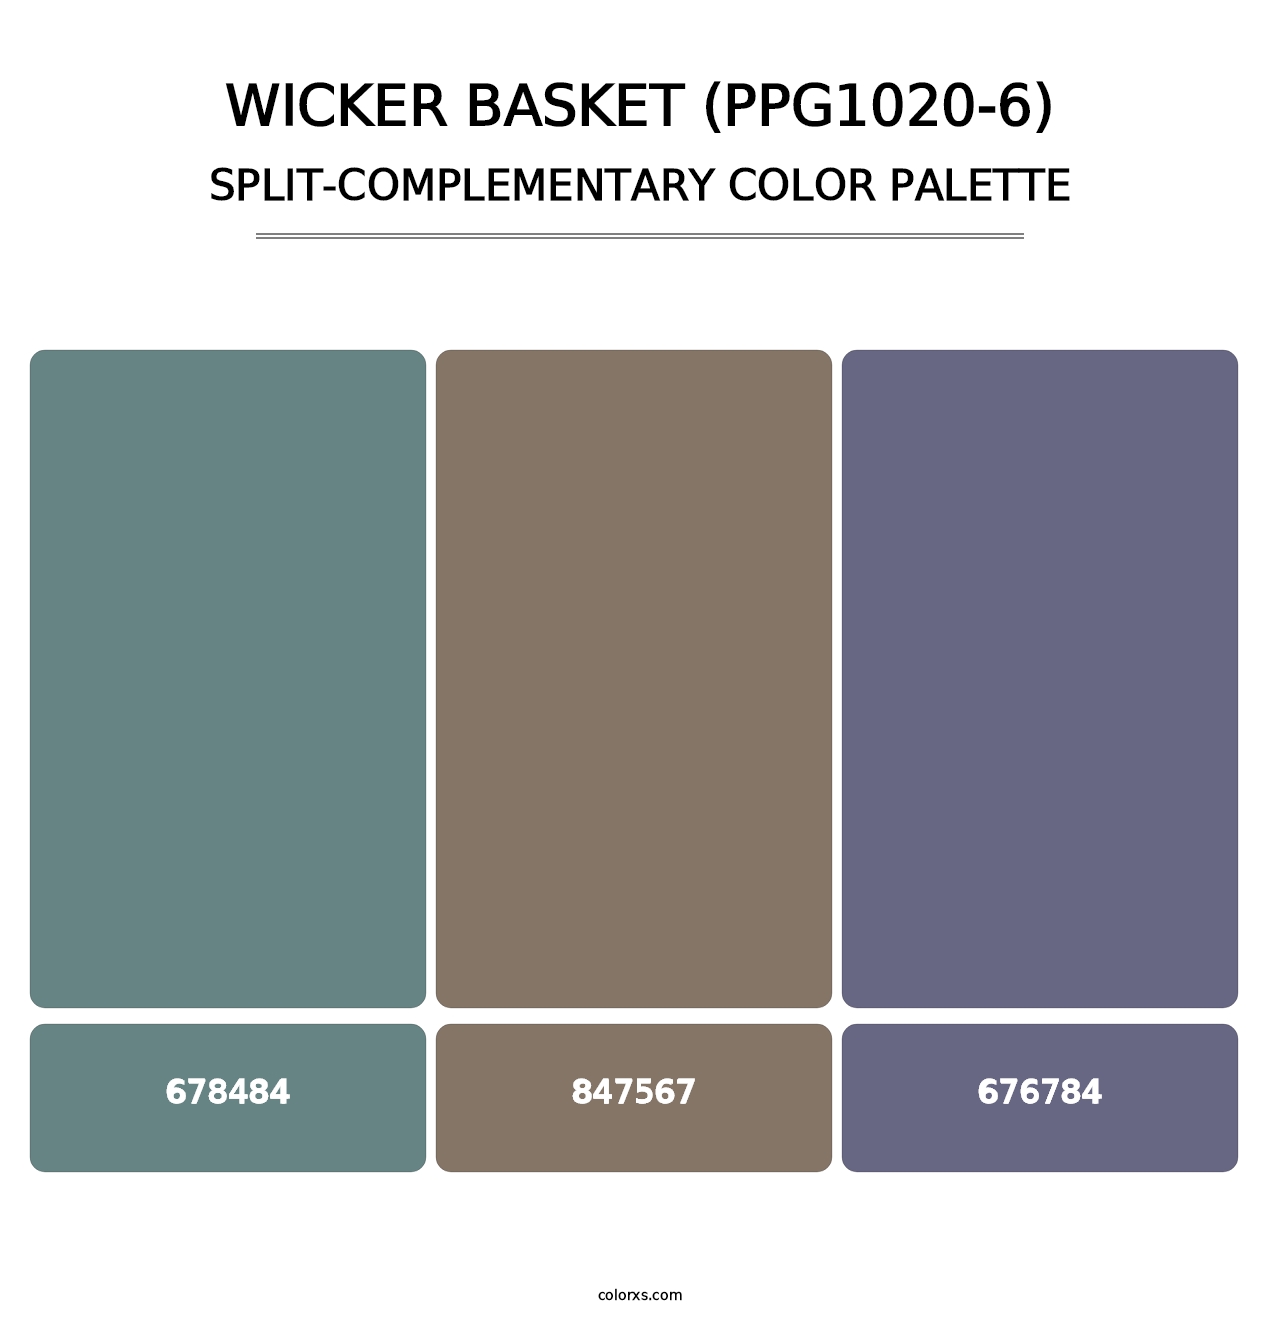 Wicker Basket (PPG1020-6) - Split-Complementary Color Palette